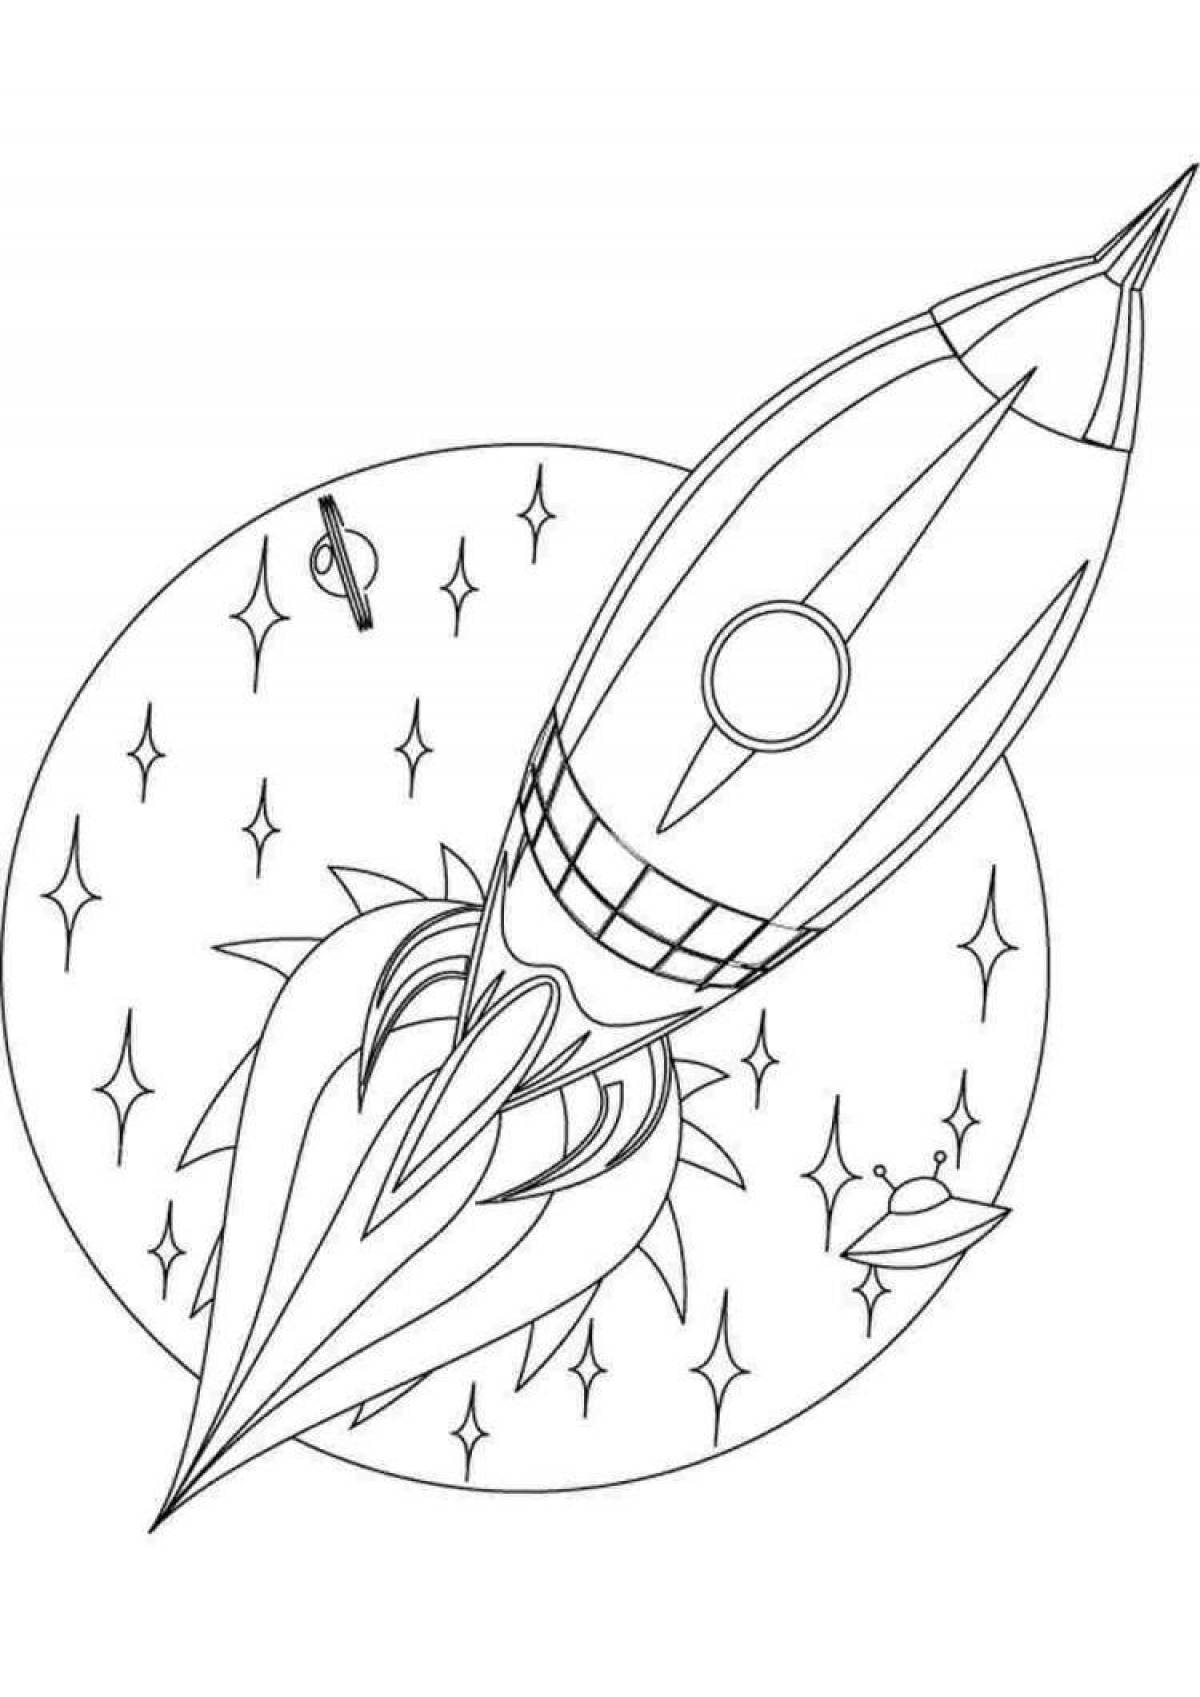 Impressive space rocket coloring page